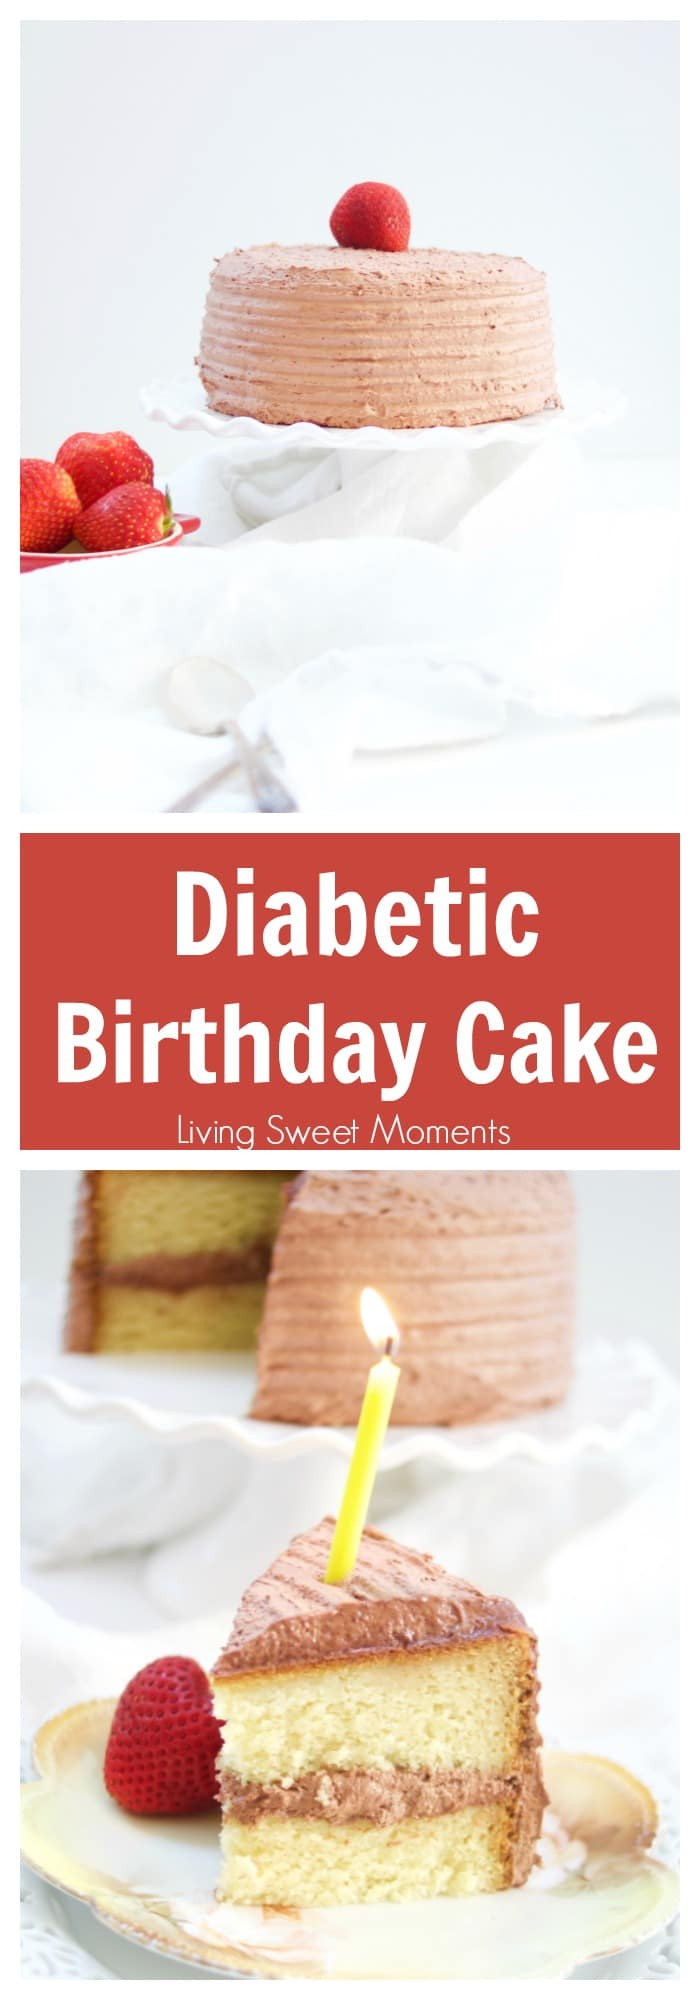 Sugar Free Chocolate Cake Recipes For Diabetics
 Delicious Diabetic Birthday Cake Recipe Living Sweet Moments